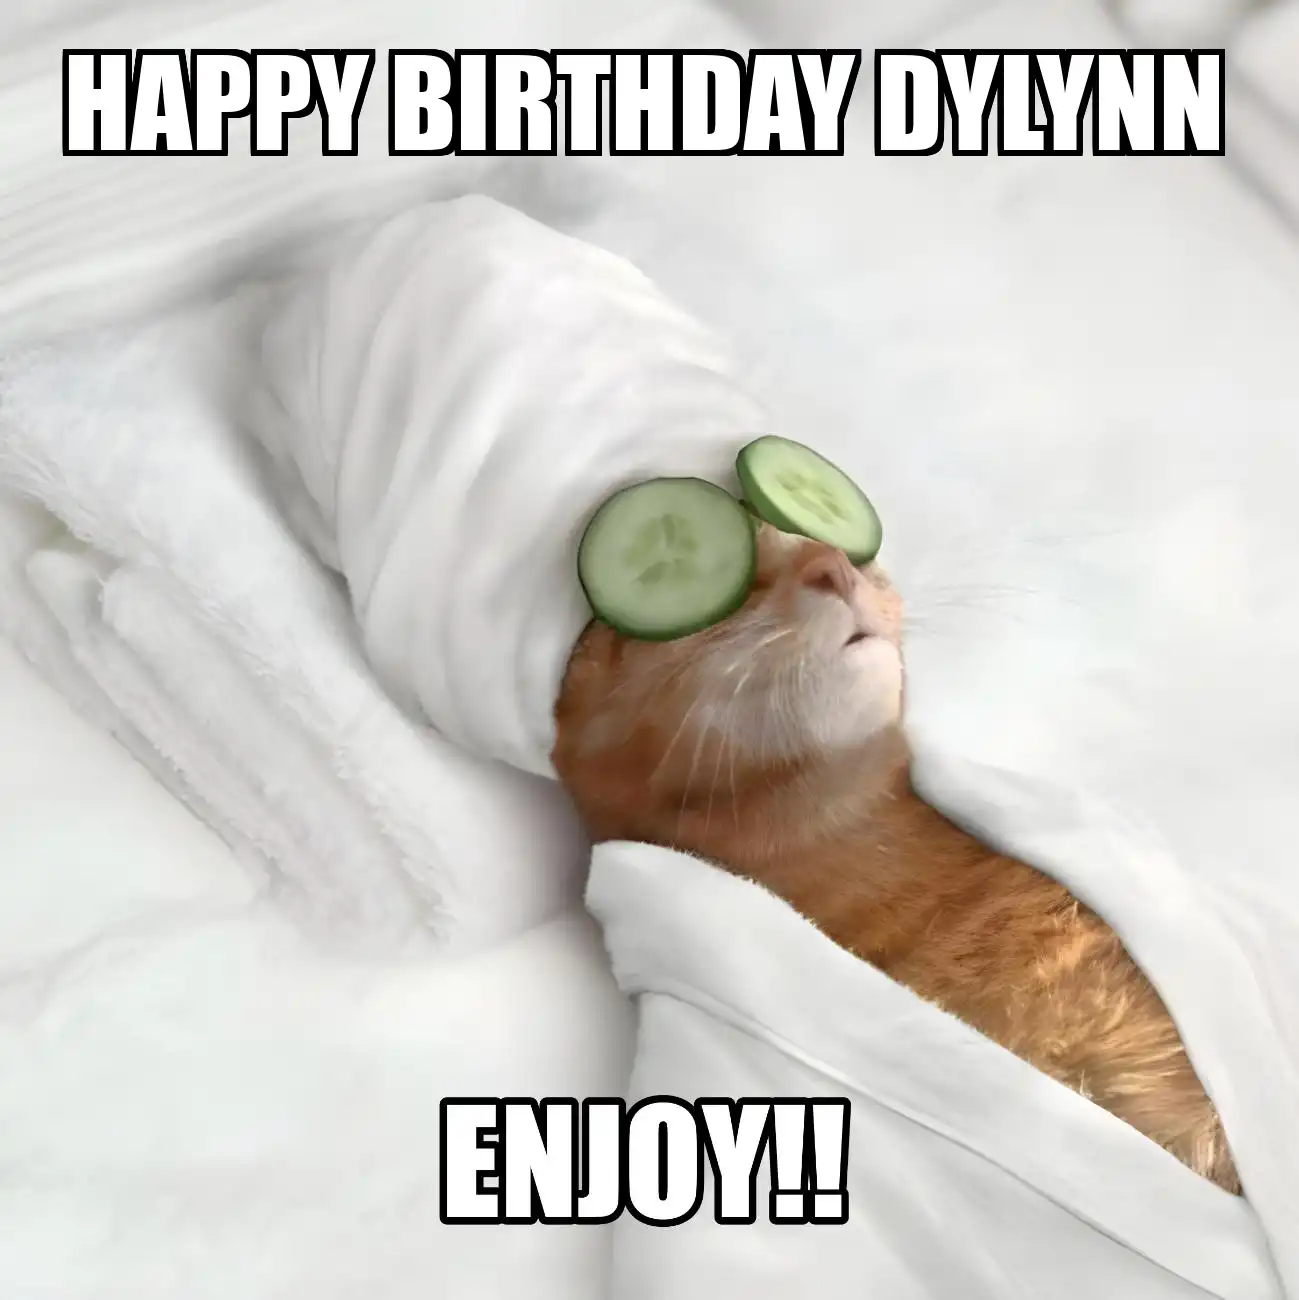 Happy Birthday Dylynn Enjoy Cat Meme